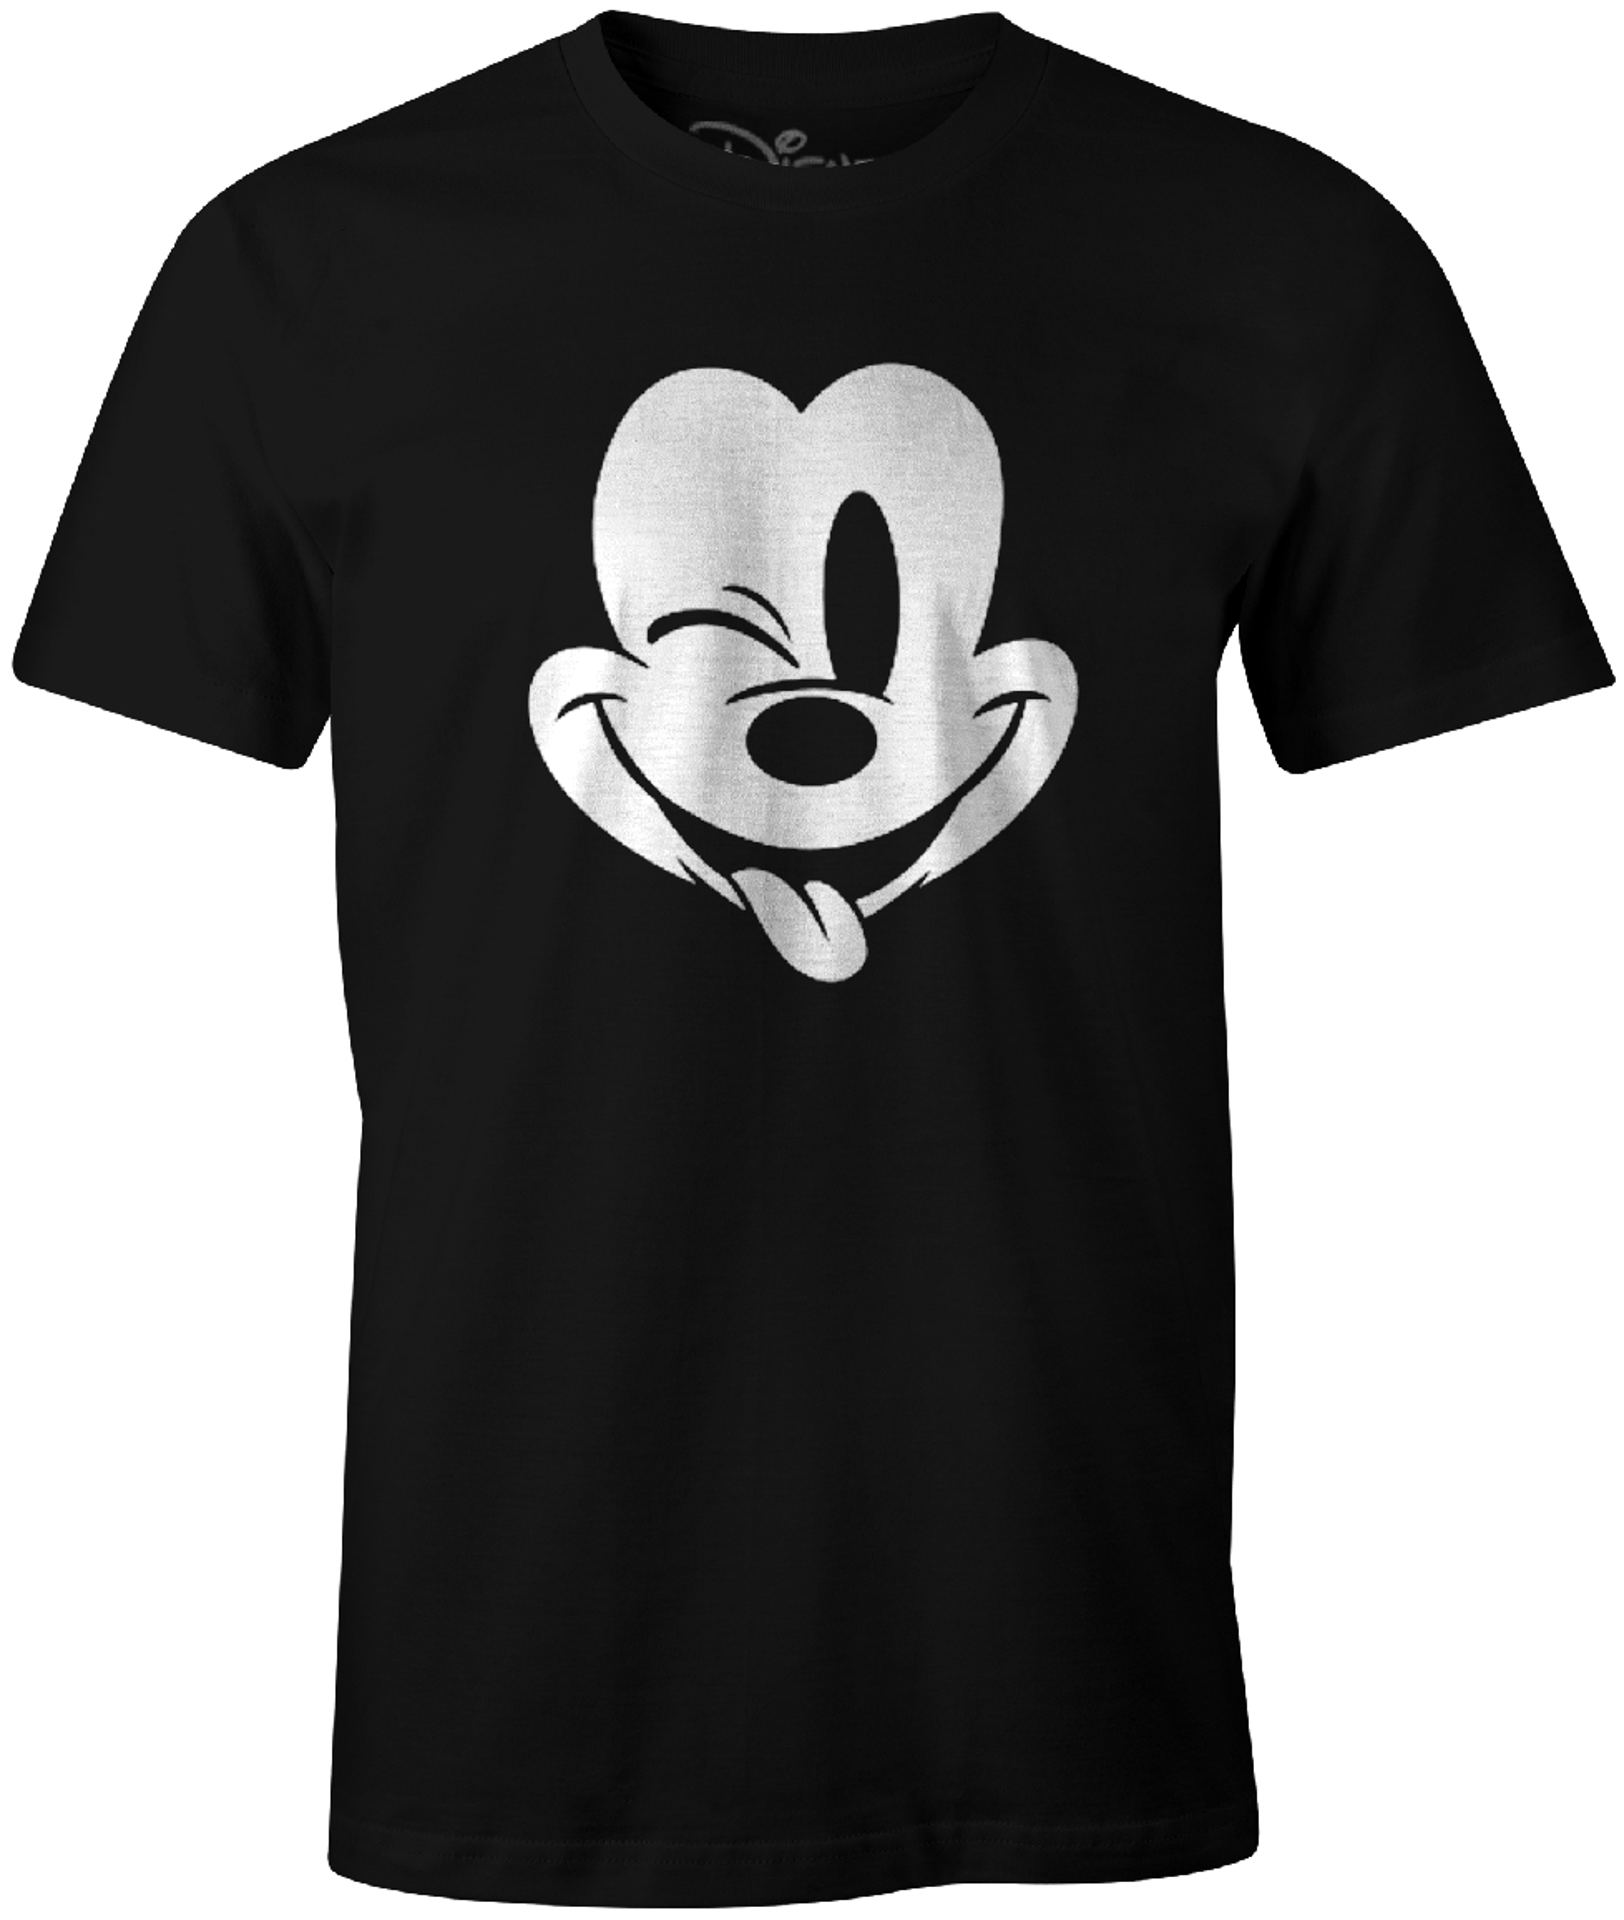 Disney - T-Shirt Noir Mickey Mouse faisant un clin d'oeil - S